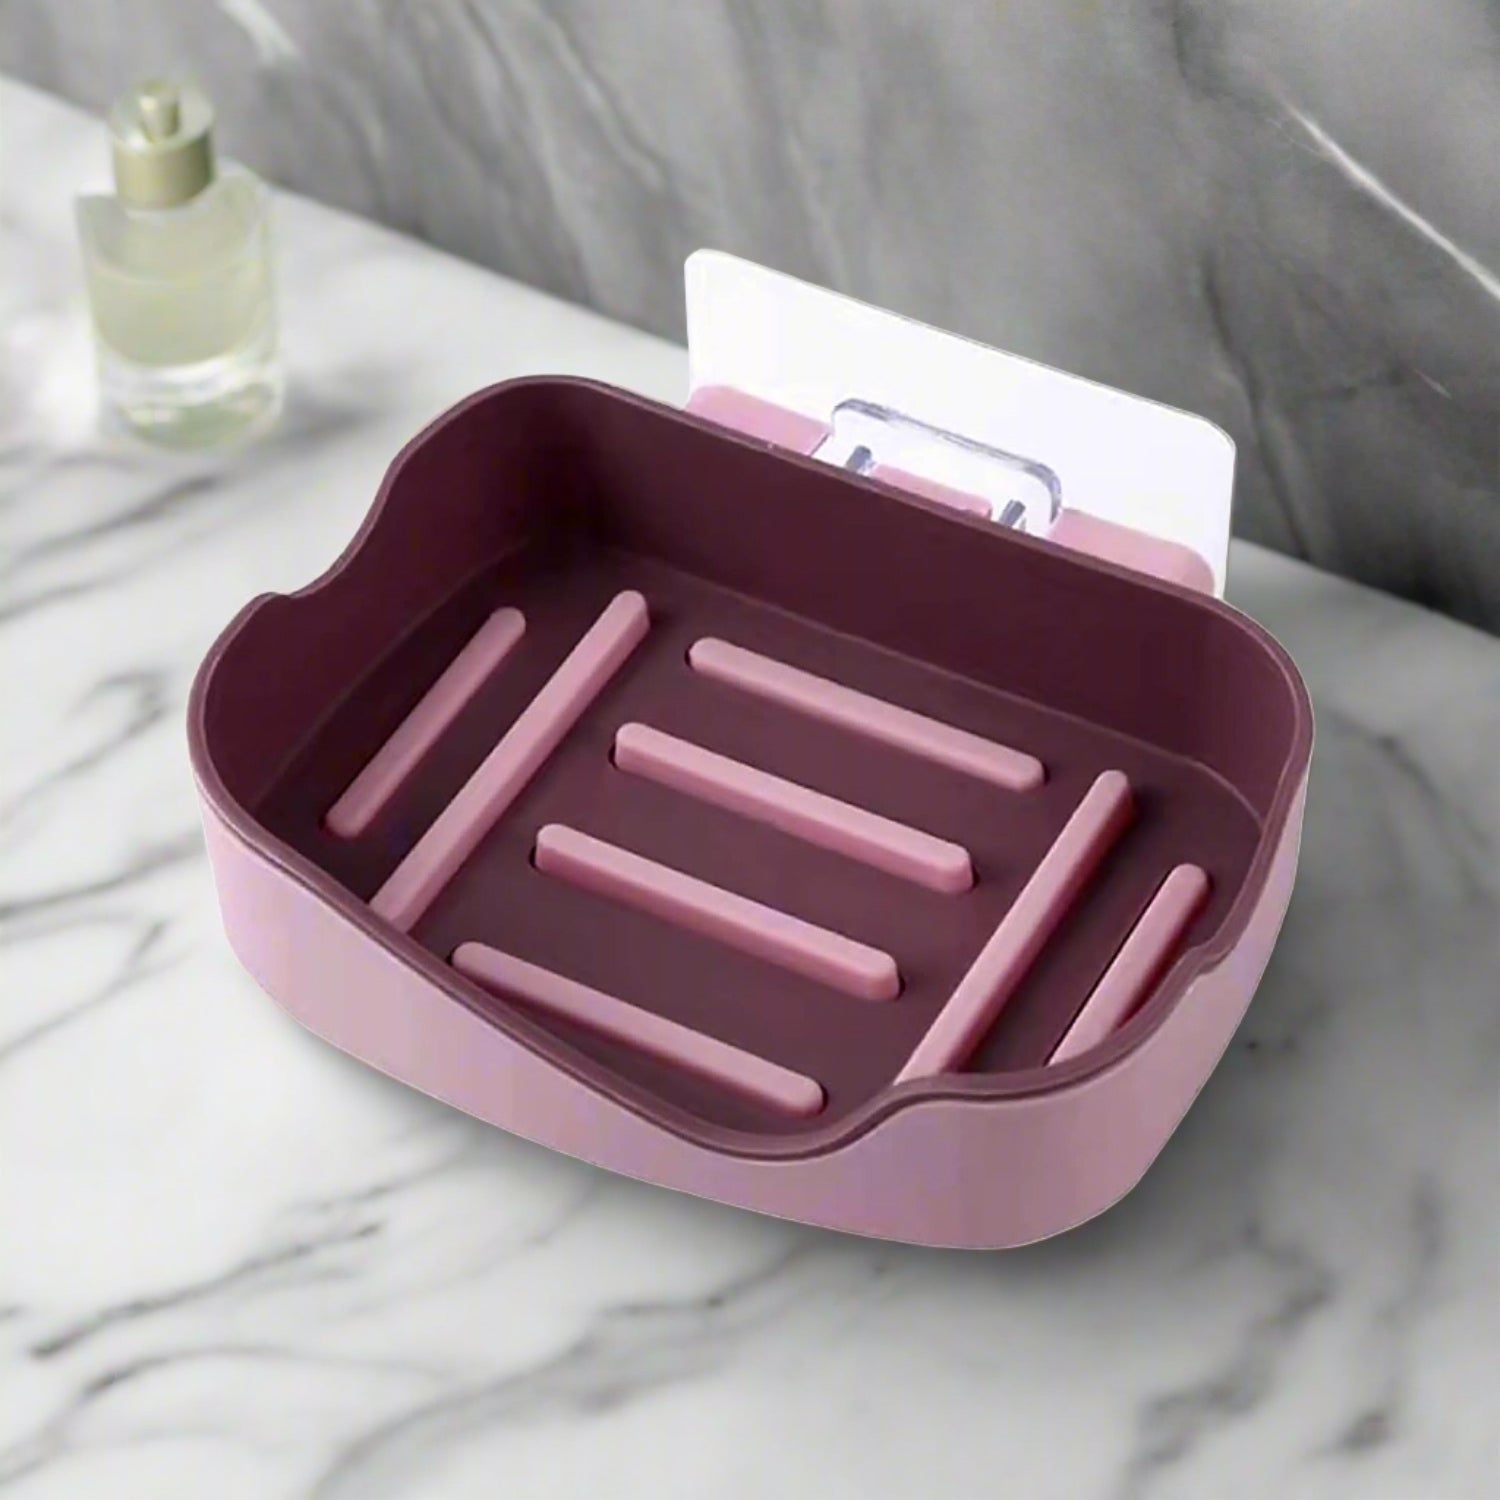 17990 Plastic Soap Dish Holder for Bathroom Shower Wall Mounted Self Adhesive Soap Holder Saver Tray-Plastic Sponge Holder for Kitchen Storage Rack Soap Box, Bathroom (1 Pc)